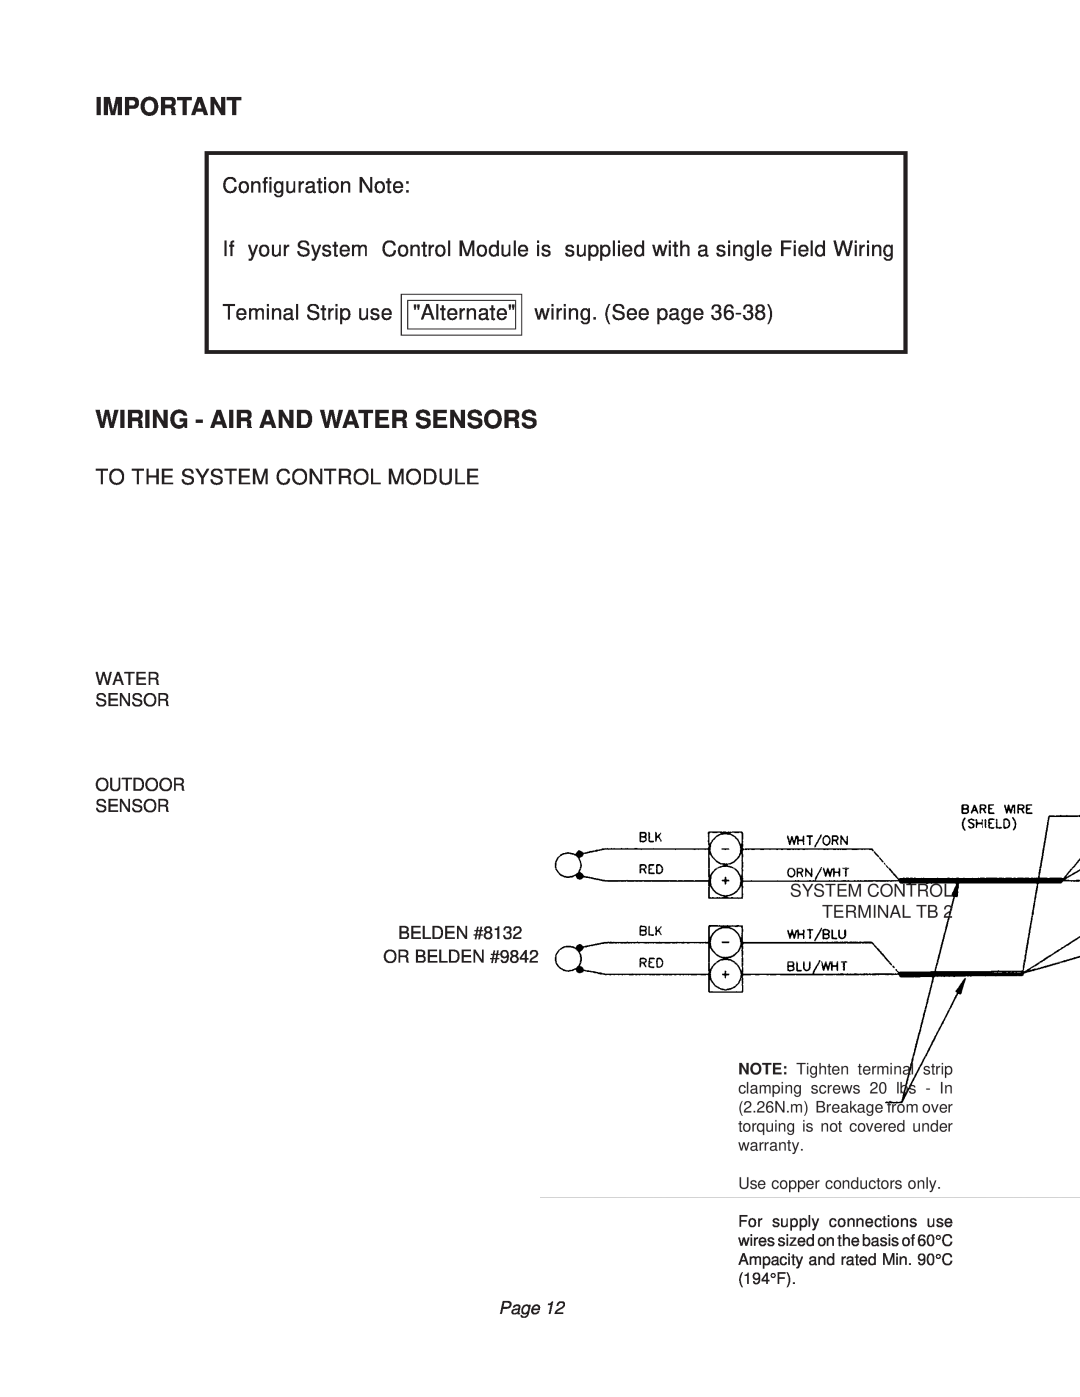 Raypak B6000 manual Wiring - Air And Water Sensors, Configuration Note, Teminal Strip use Alternatewiring. See page 